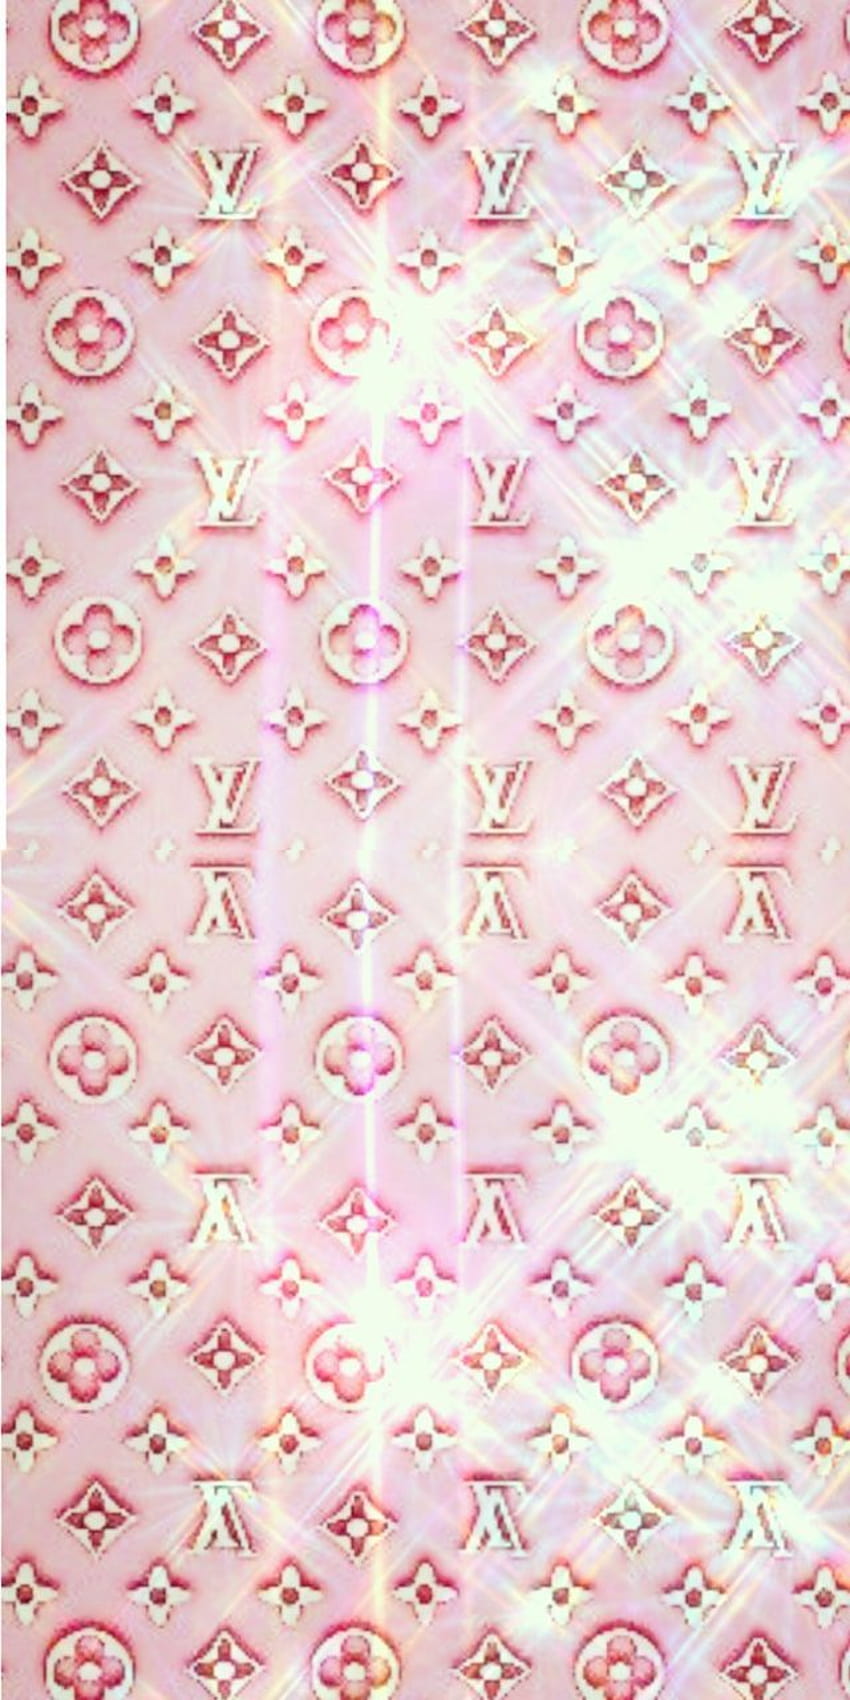 Louis Vuitton Lock Screen Iphone, phone designer lv HD phone wallpaper